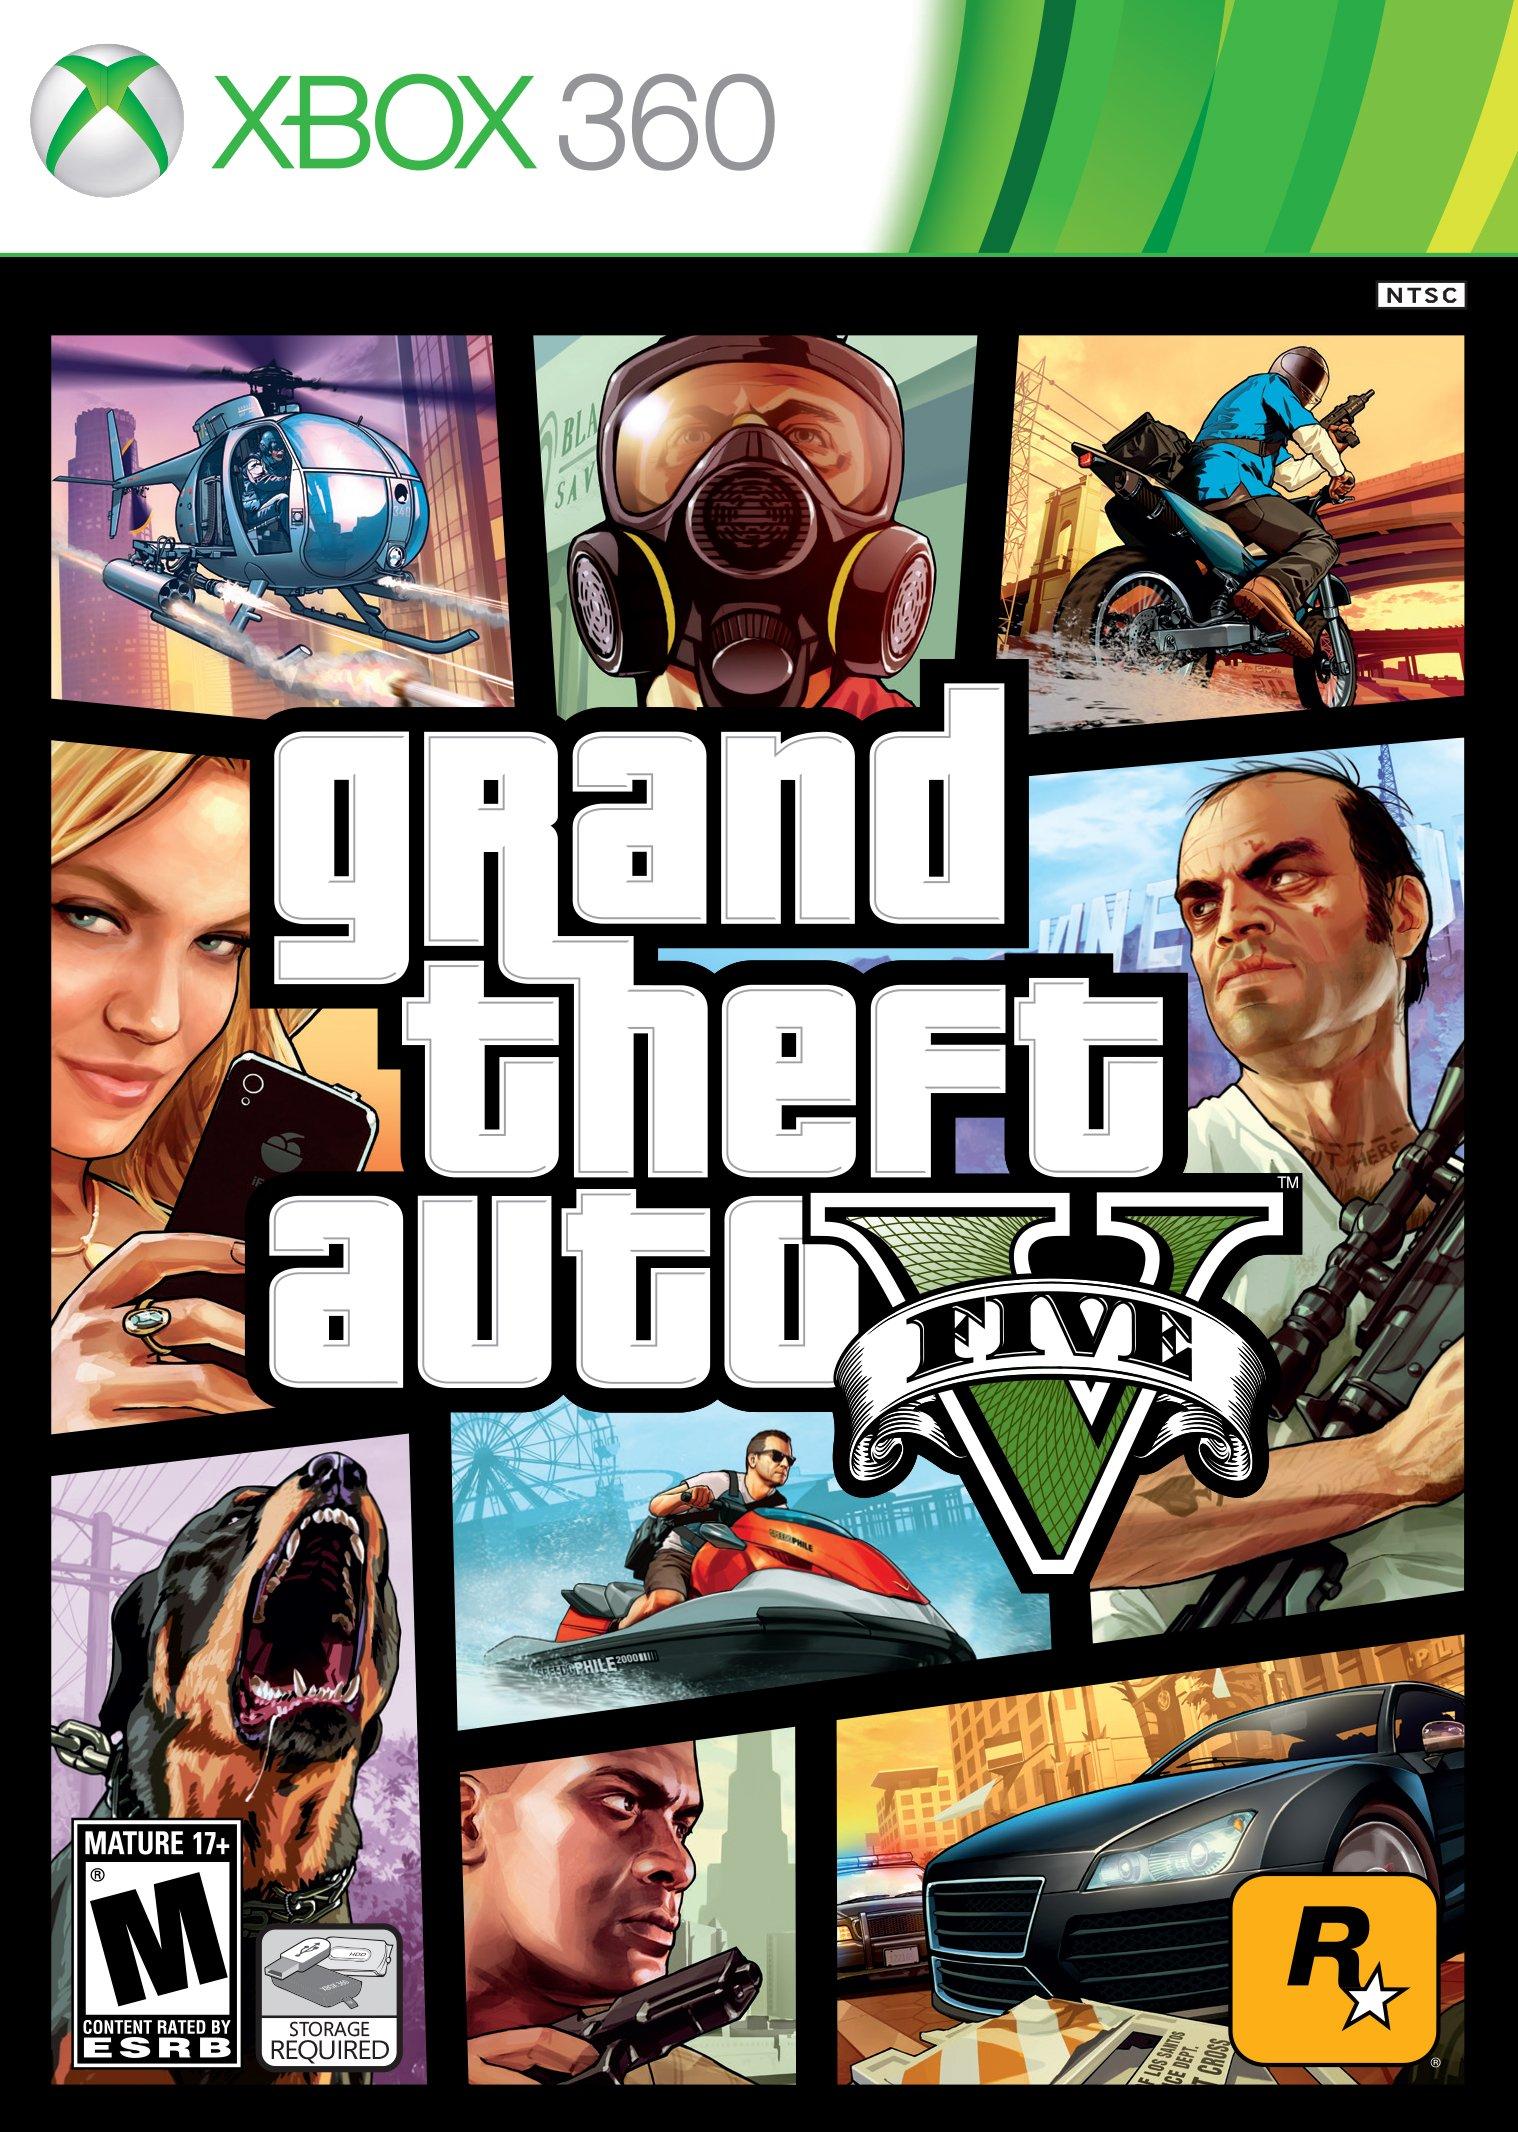 GTA 5: Grand Theft Auto V for PS4